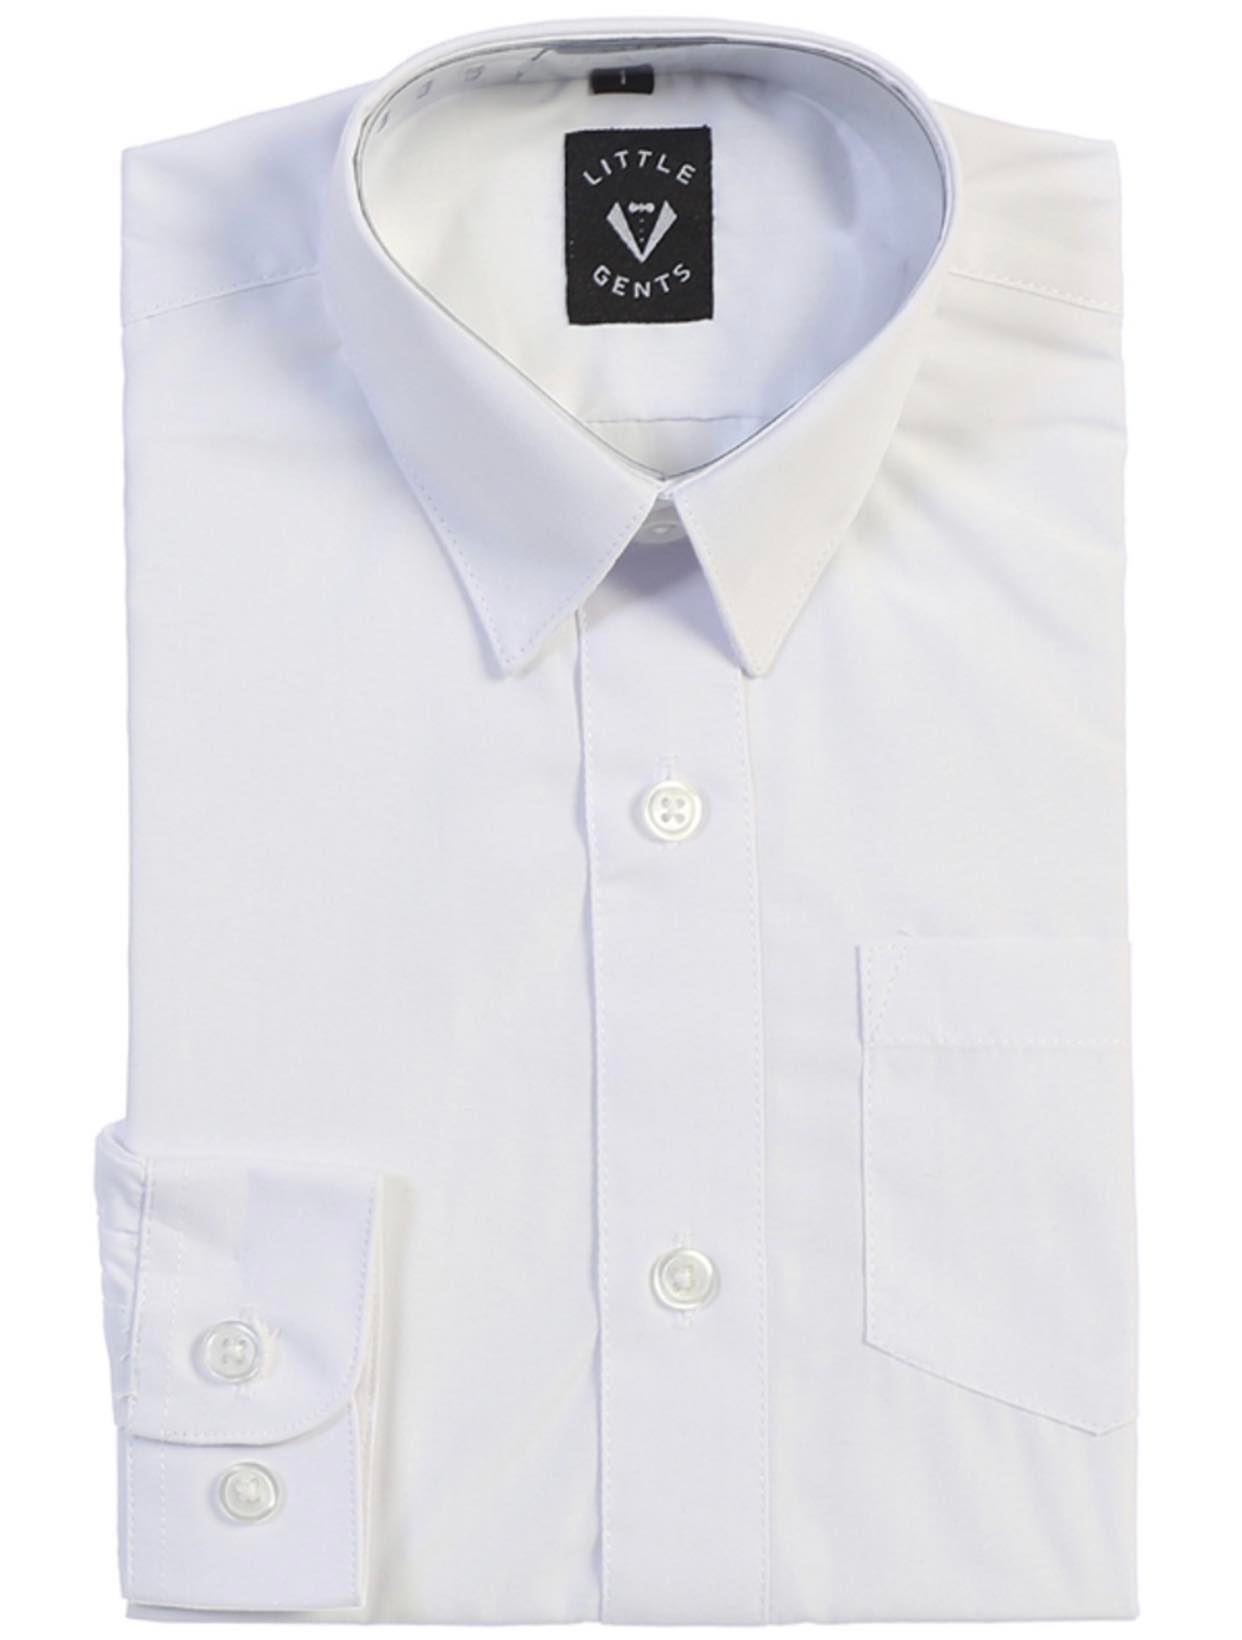 white long sleeve button down shirt